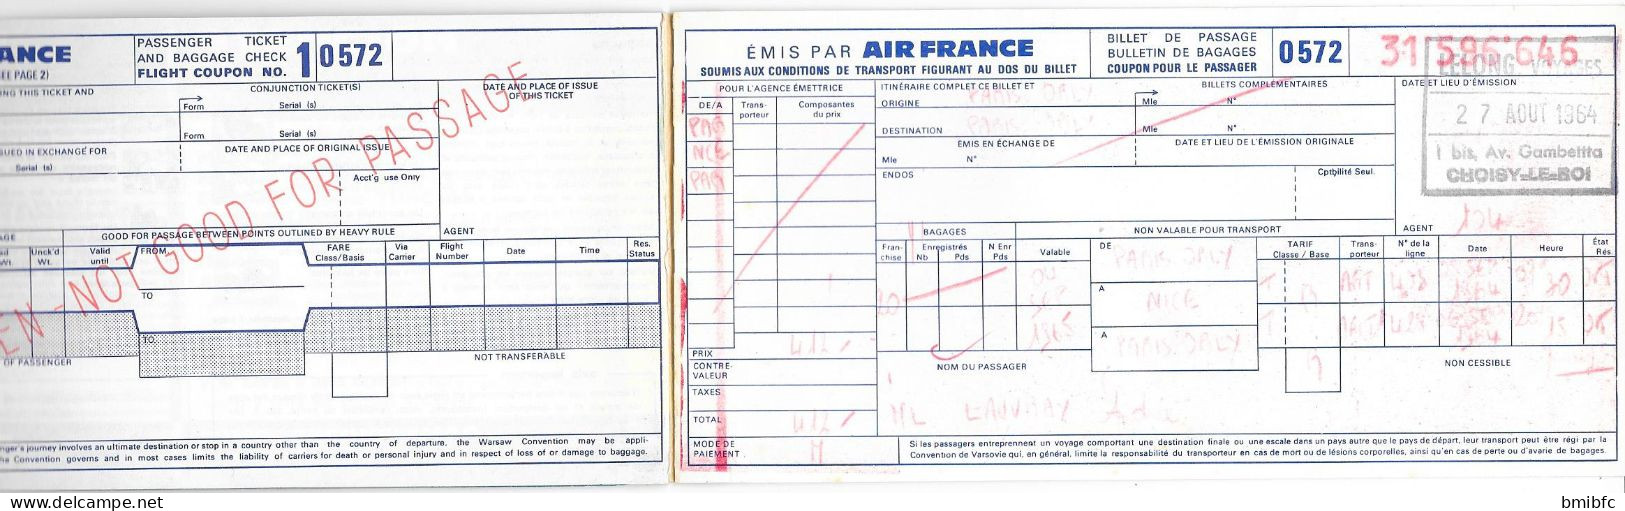 AIR FRANCE 2 Billets N° 31 596 646 Et 31 596 645 - PARIS ORLY - NICE - PARIS ORLY Du 27 Août 1964 - Europa